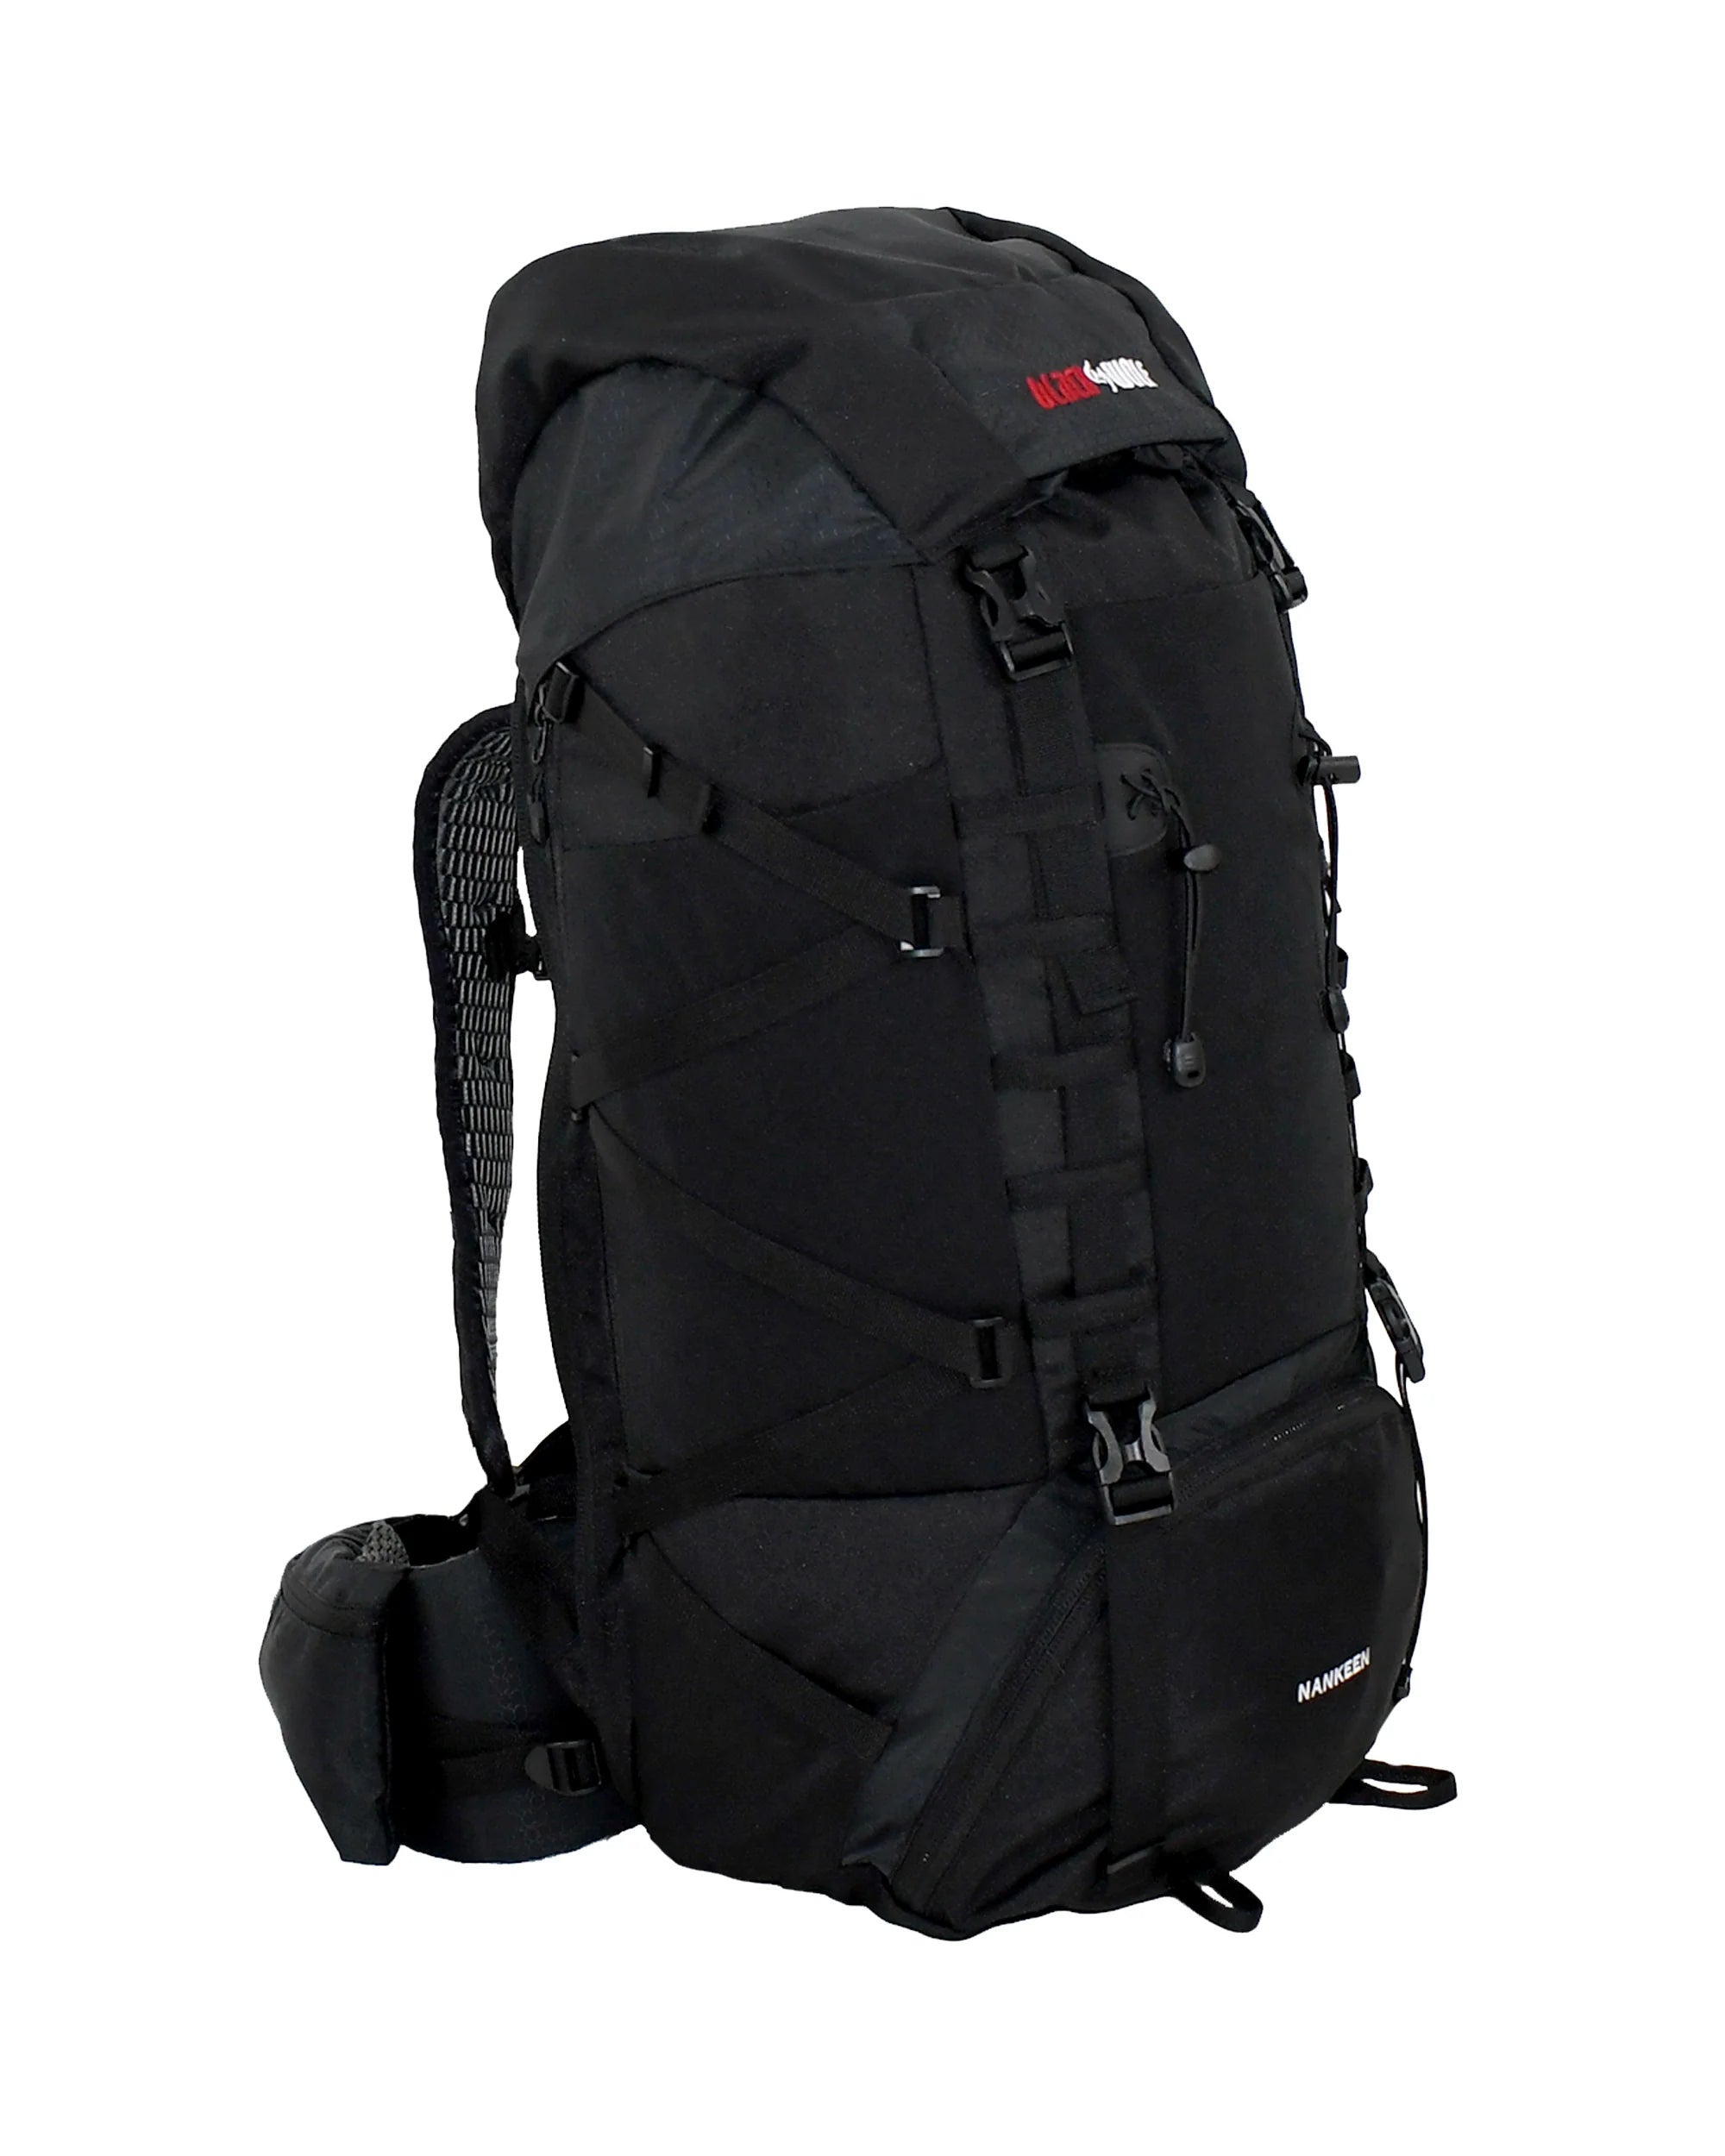 BlackWolf Nankeen Backpack - 60 Litres